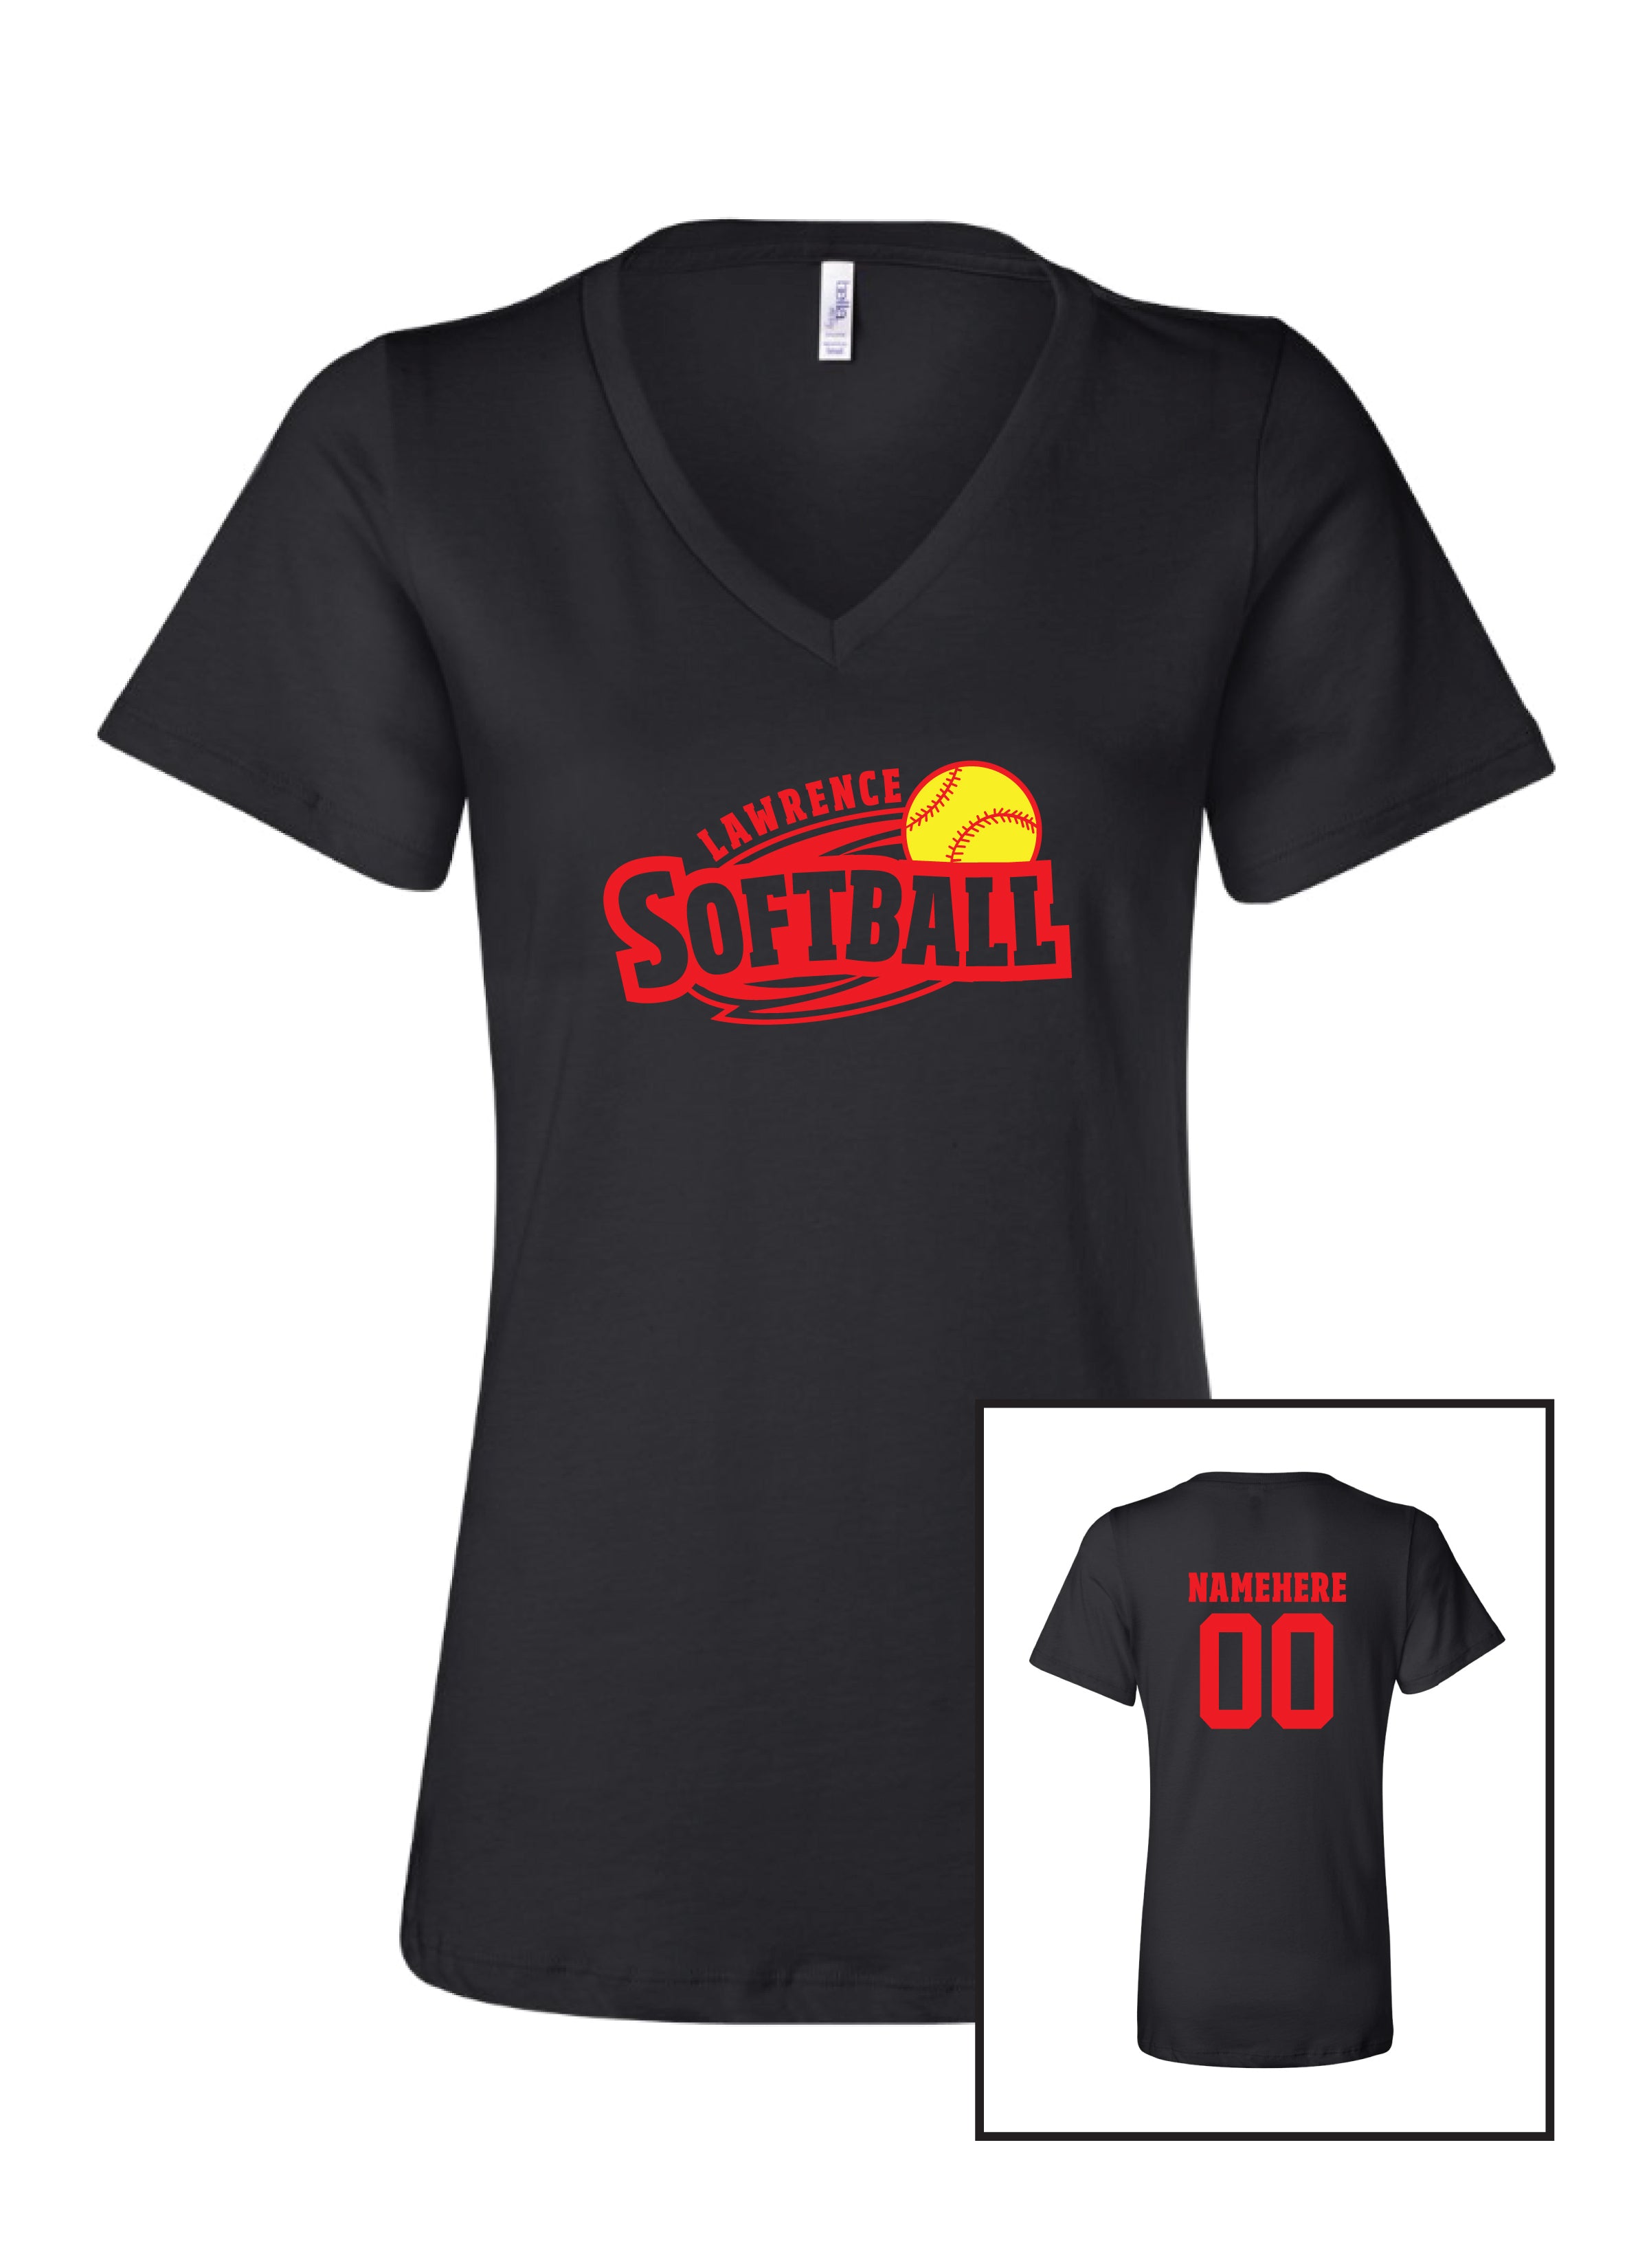 Lawrence Softball Women's V Neck Cotton T-Shirt